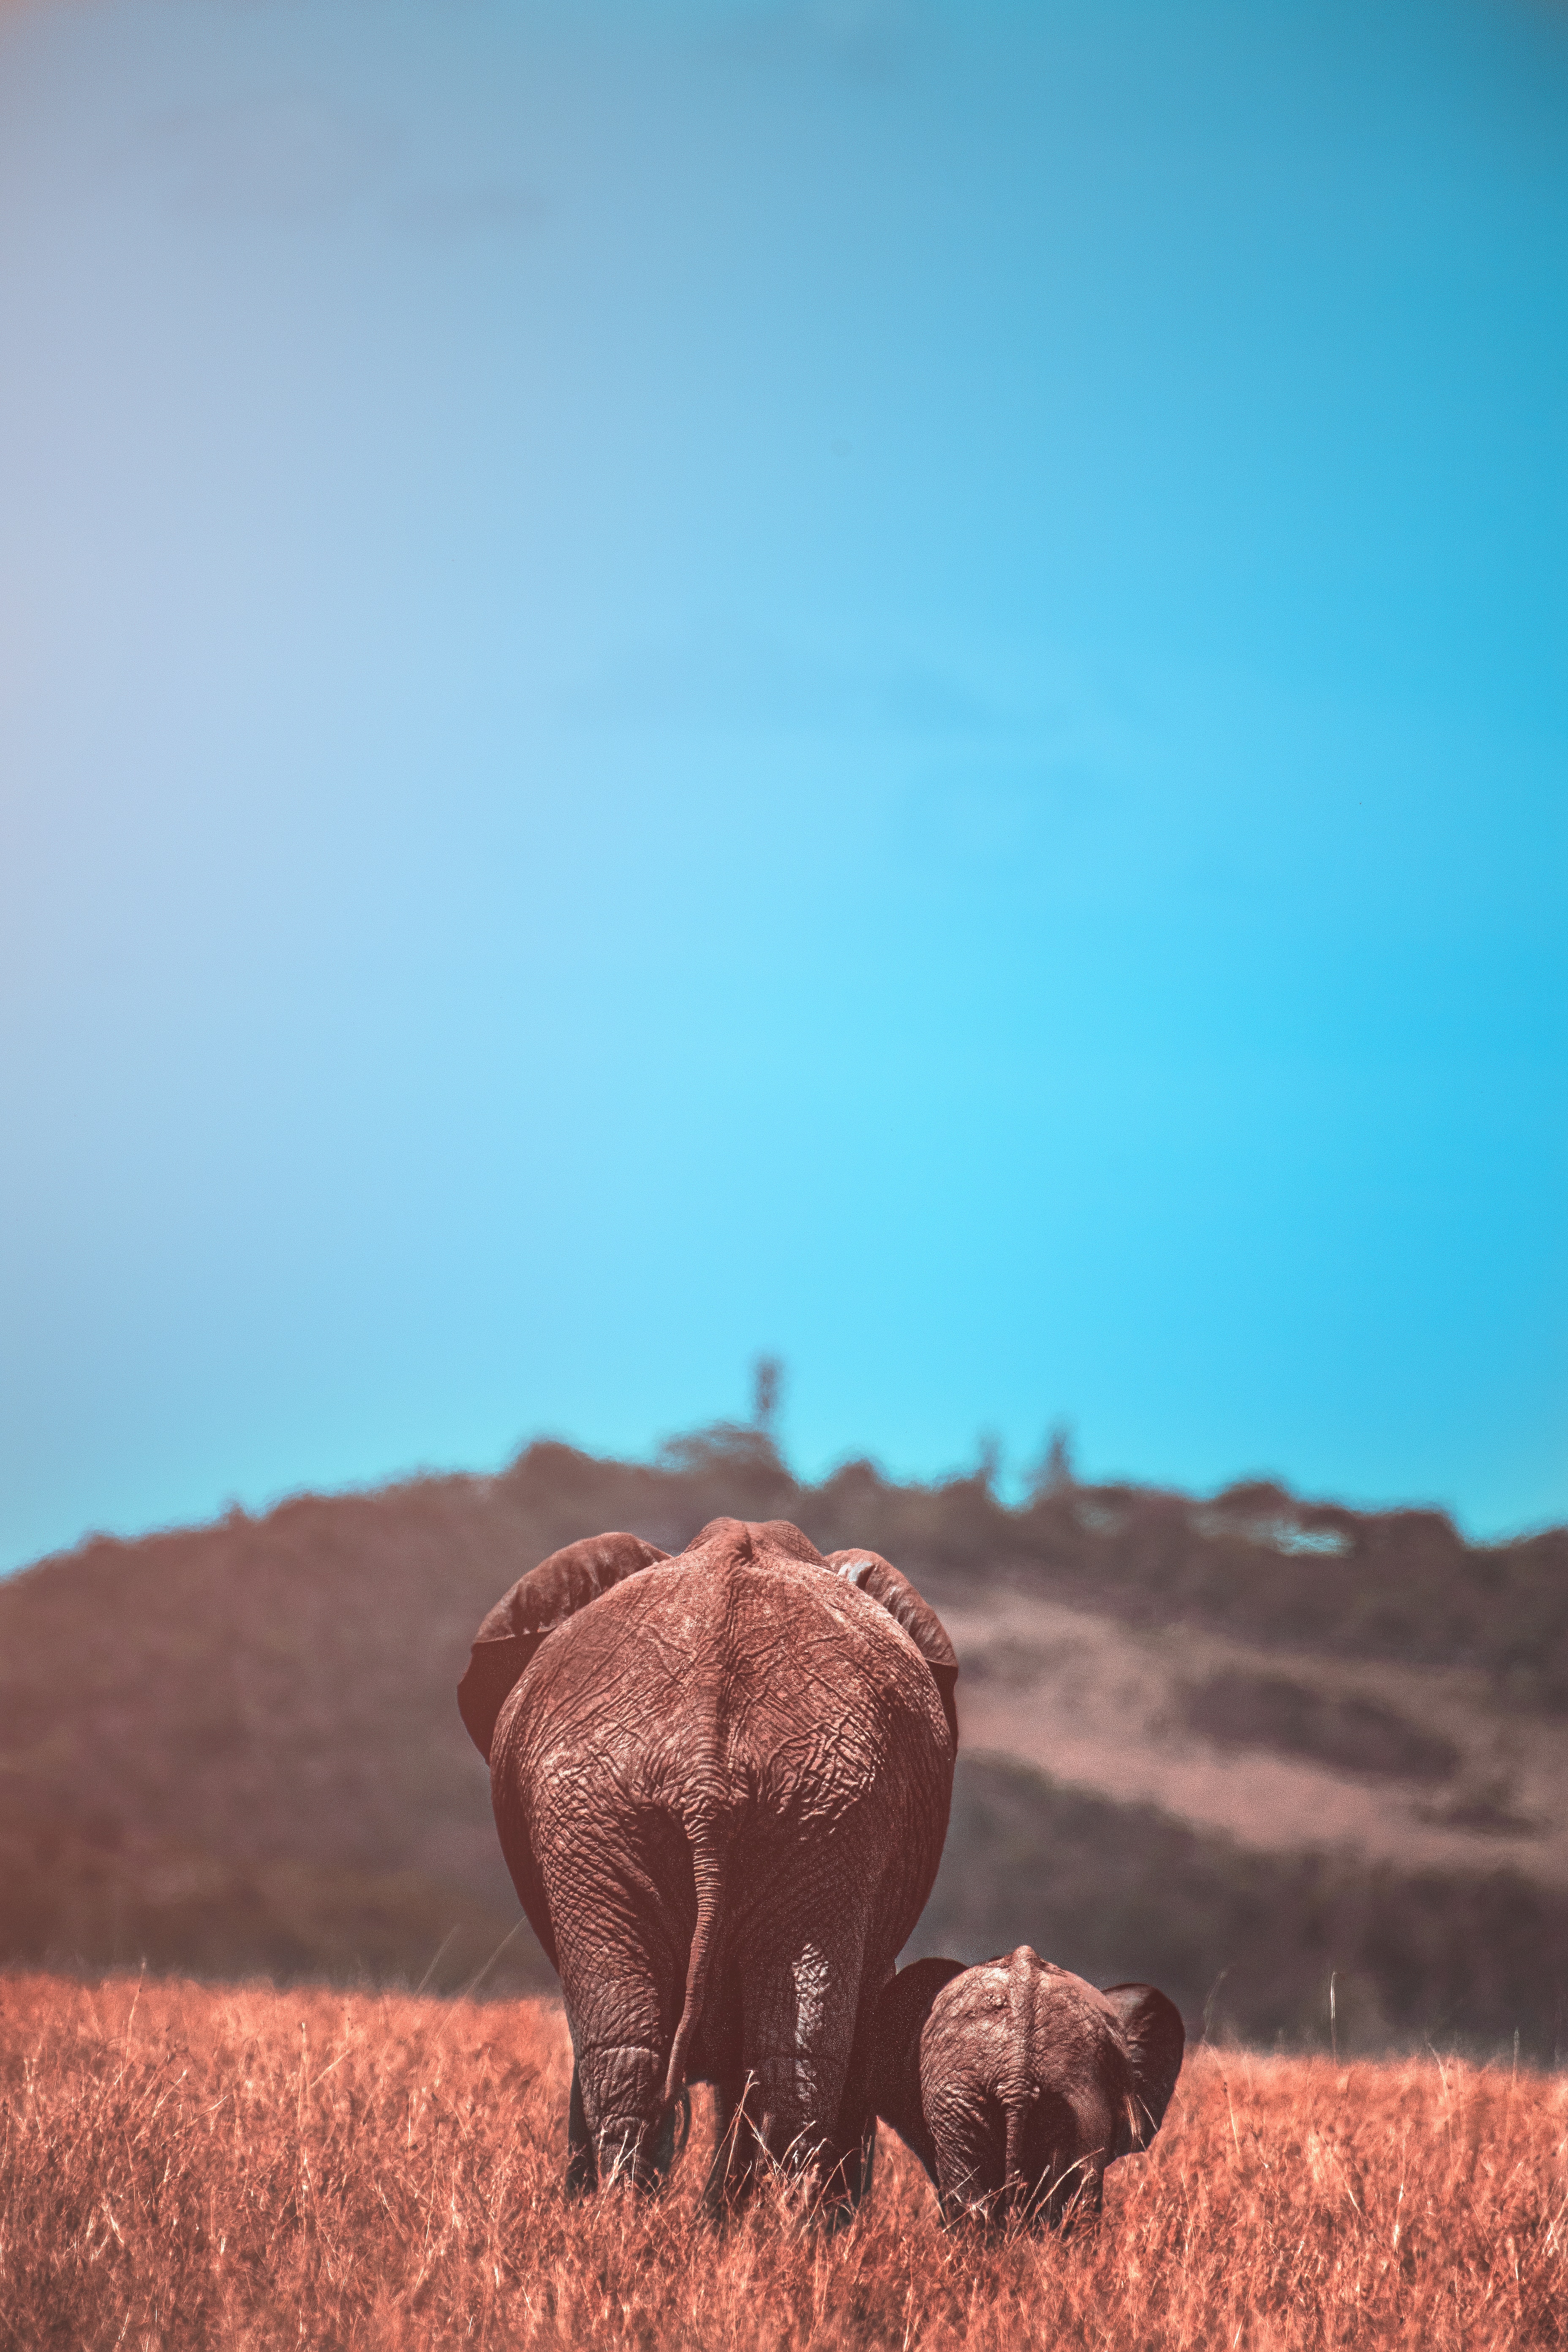 68664 Hintergrundbild herunterladen elefanten, elefant, tiere, elephants, junge, wilde natur, wildlife, joey - Bildschirmschoner und Bilder kostenlos